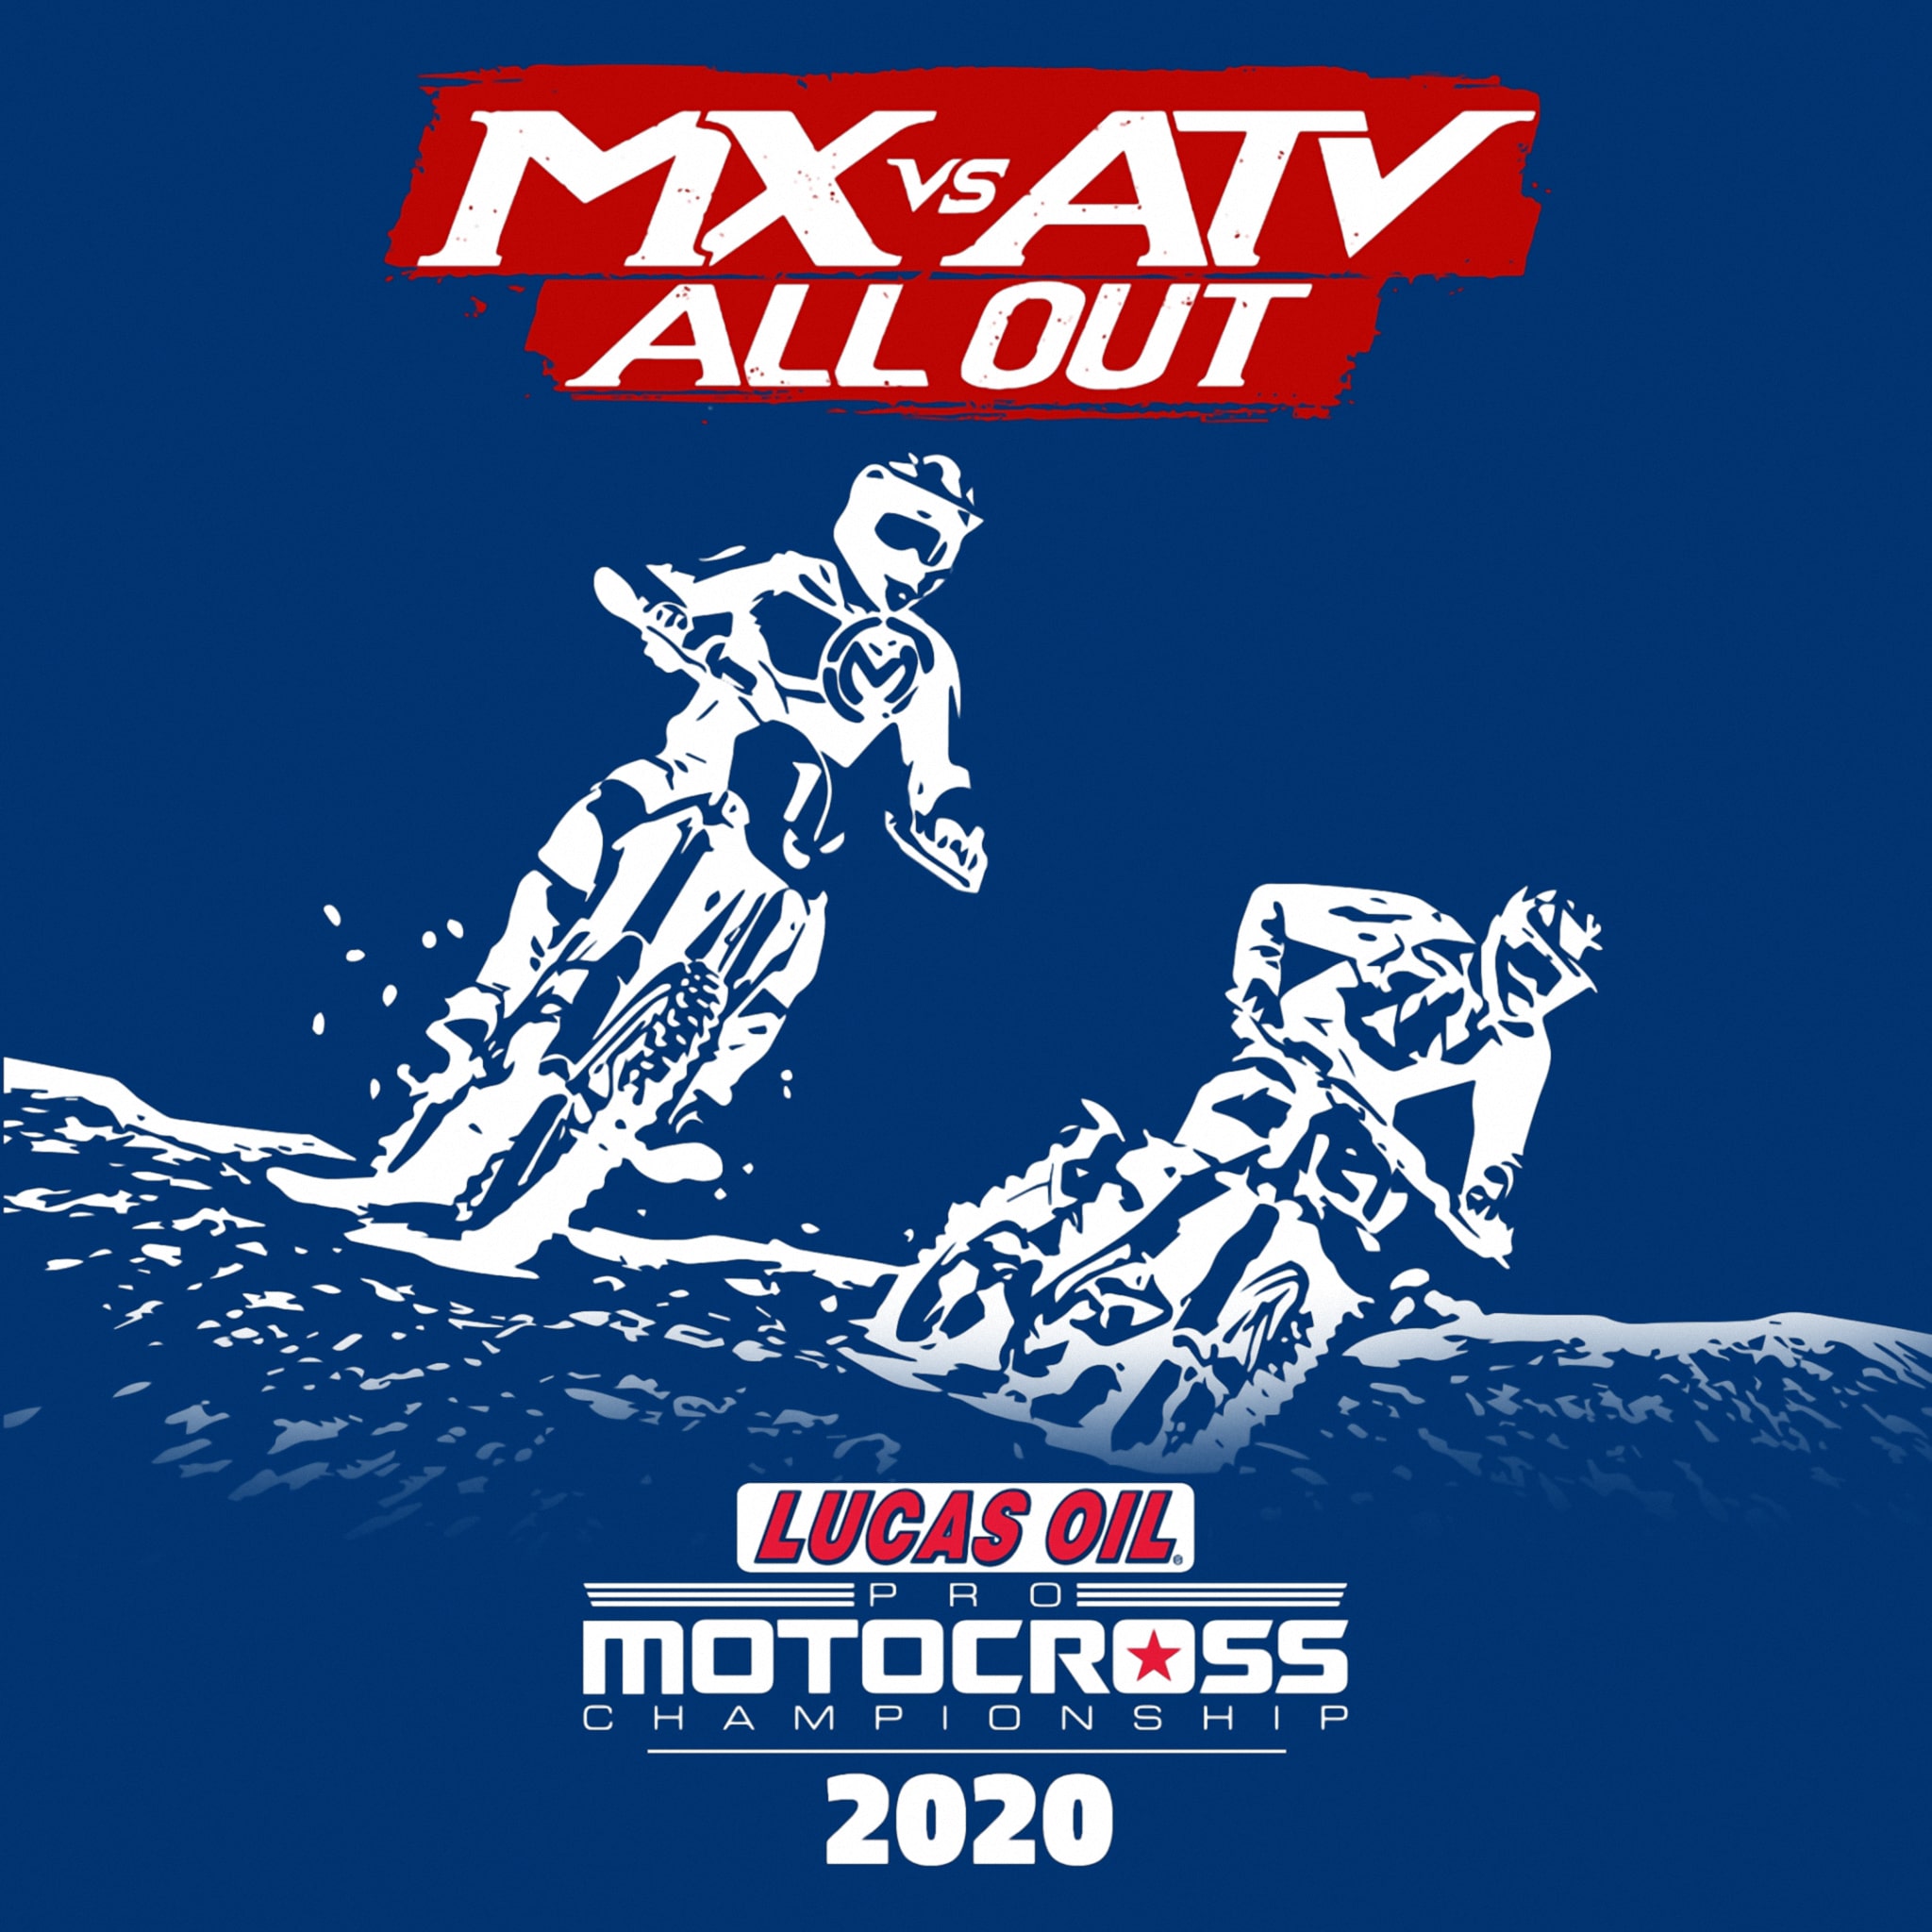 Mx Vs Atv All Out Ama Pro Motocross Championship